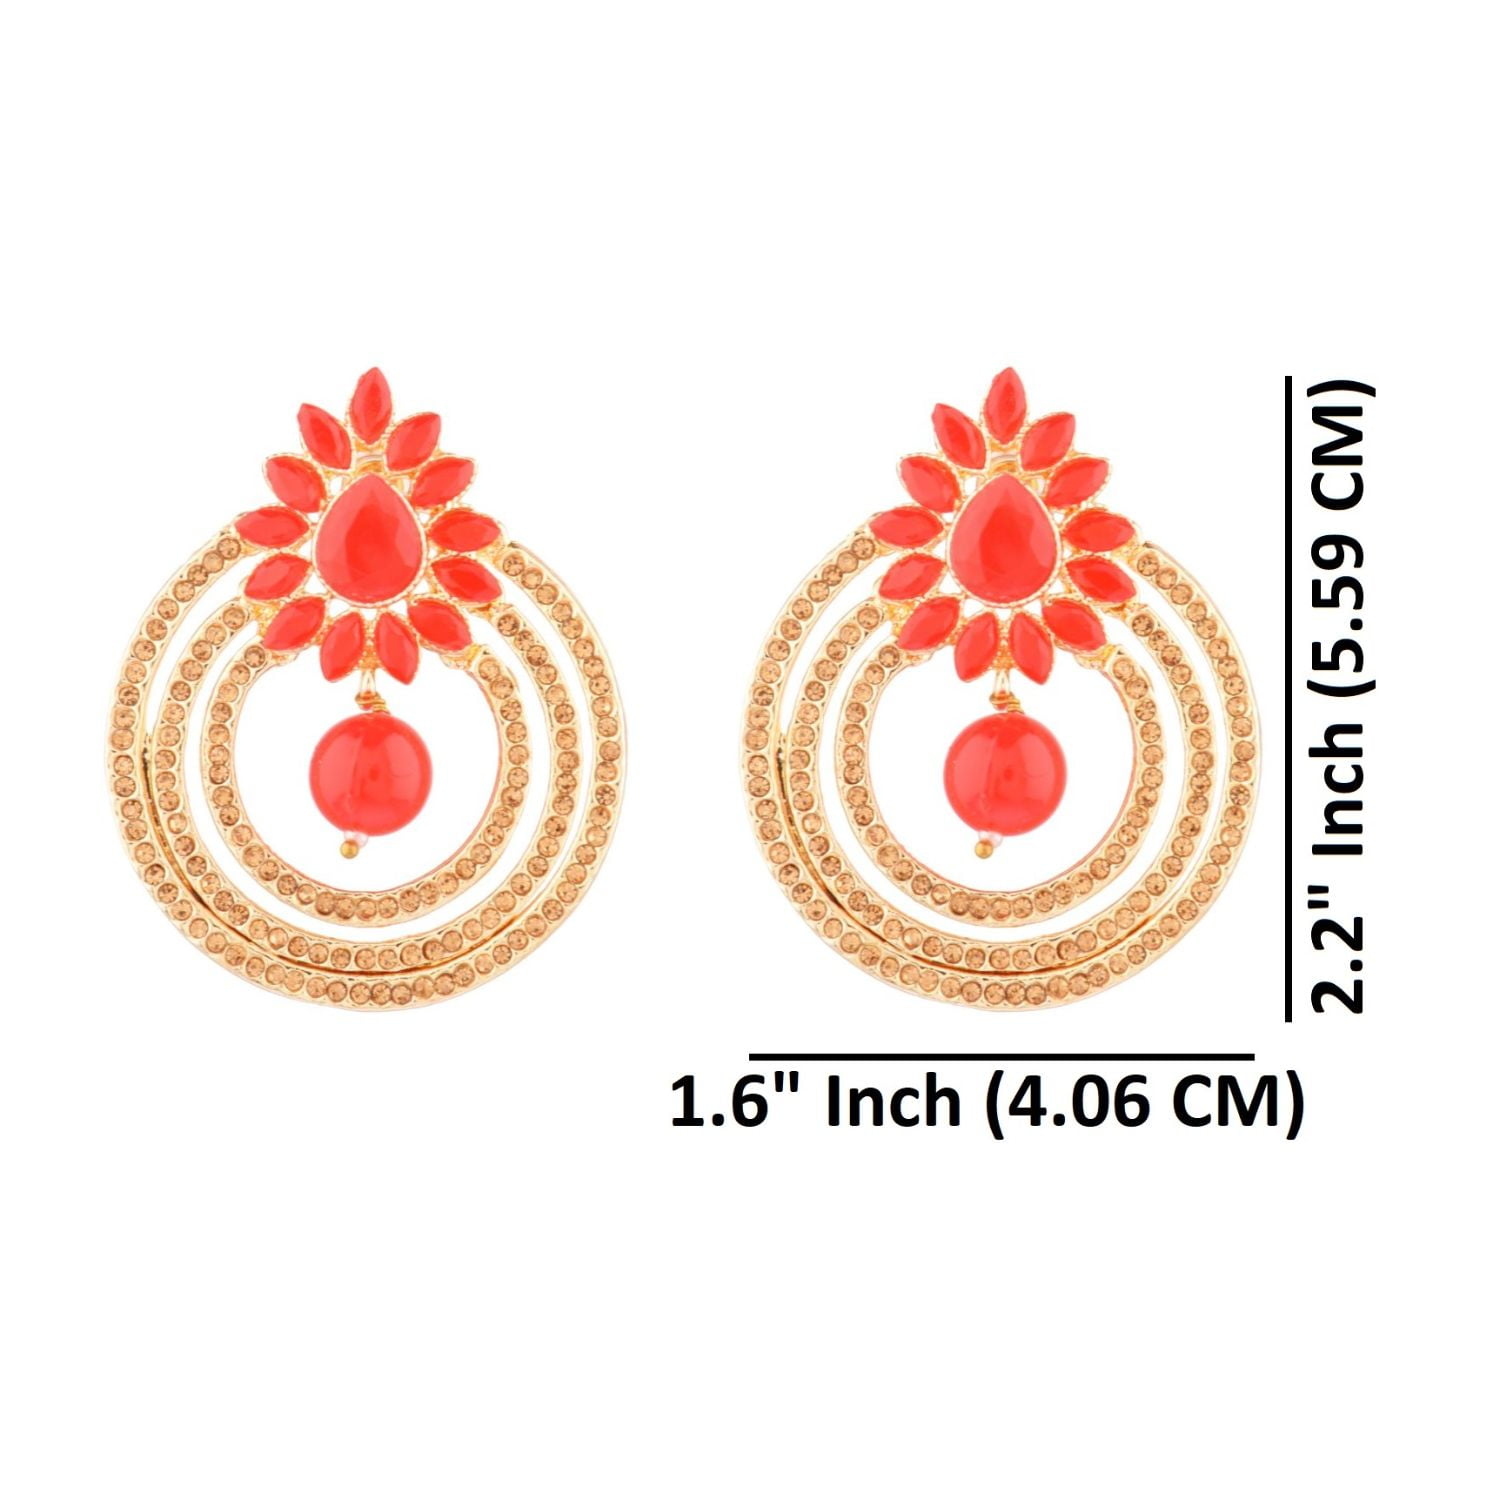 Efulgenz Crystal Austrian Stone Earrings Round Hoop Style Big Stud Earring  Indian Jewellery for Women Girls, Red - Walmart.com